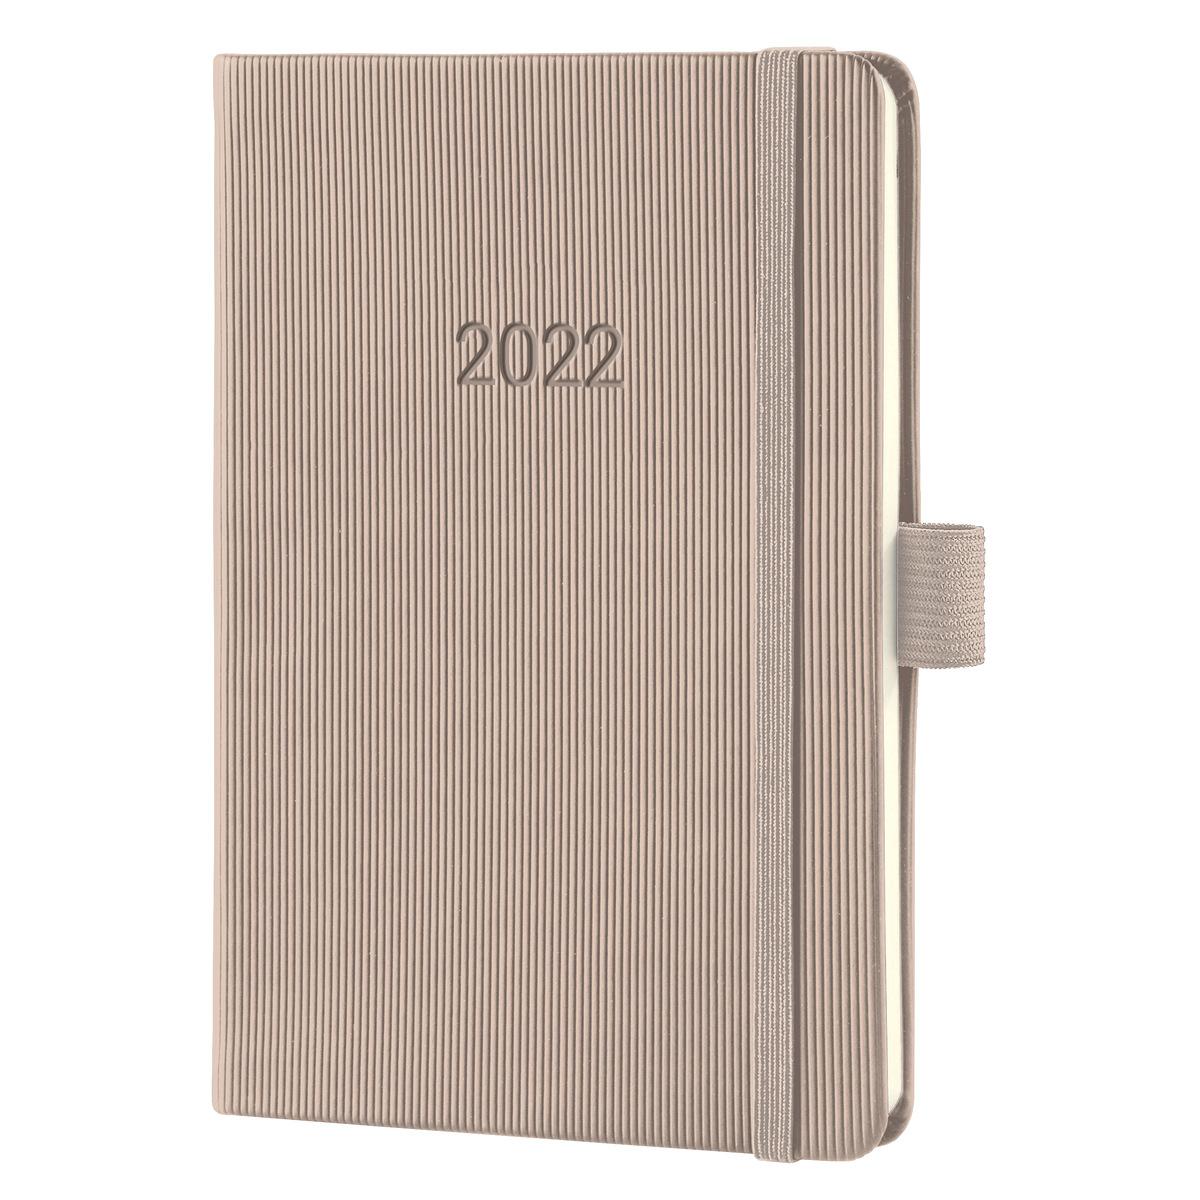 C2261-Kalender-2022-CONCEPTUM-hardcover